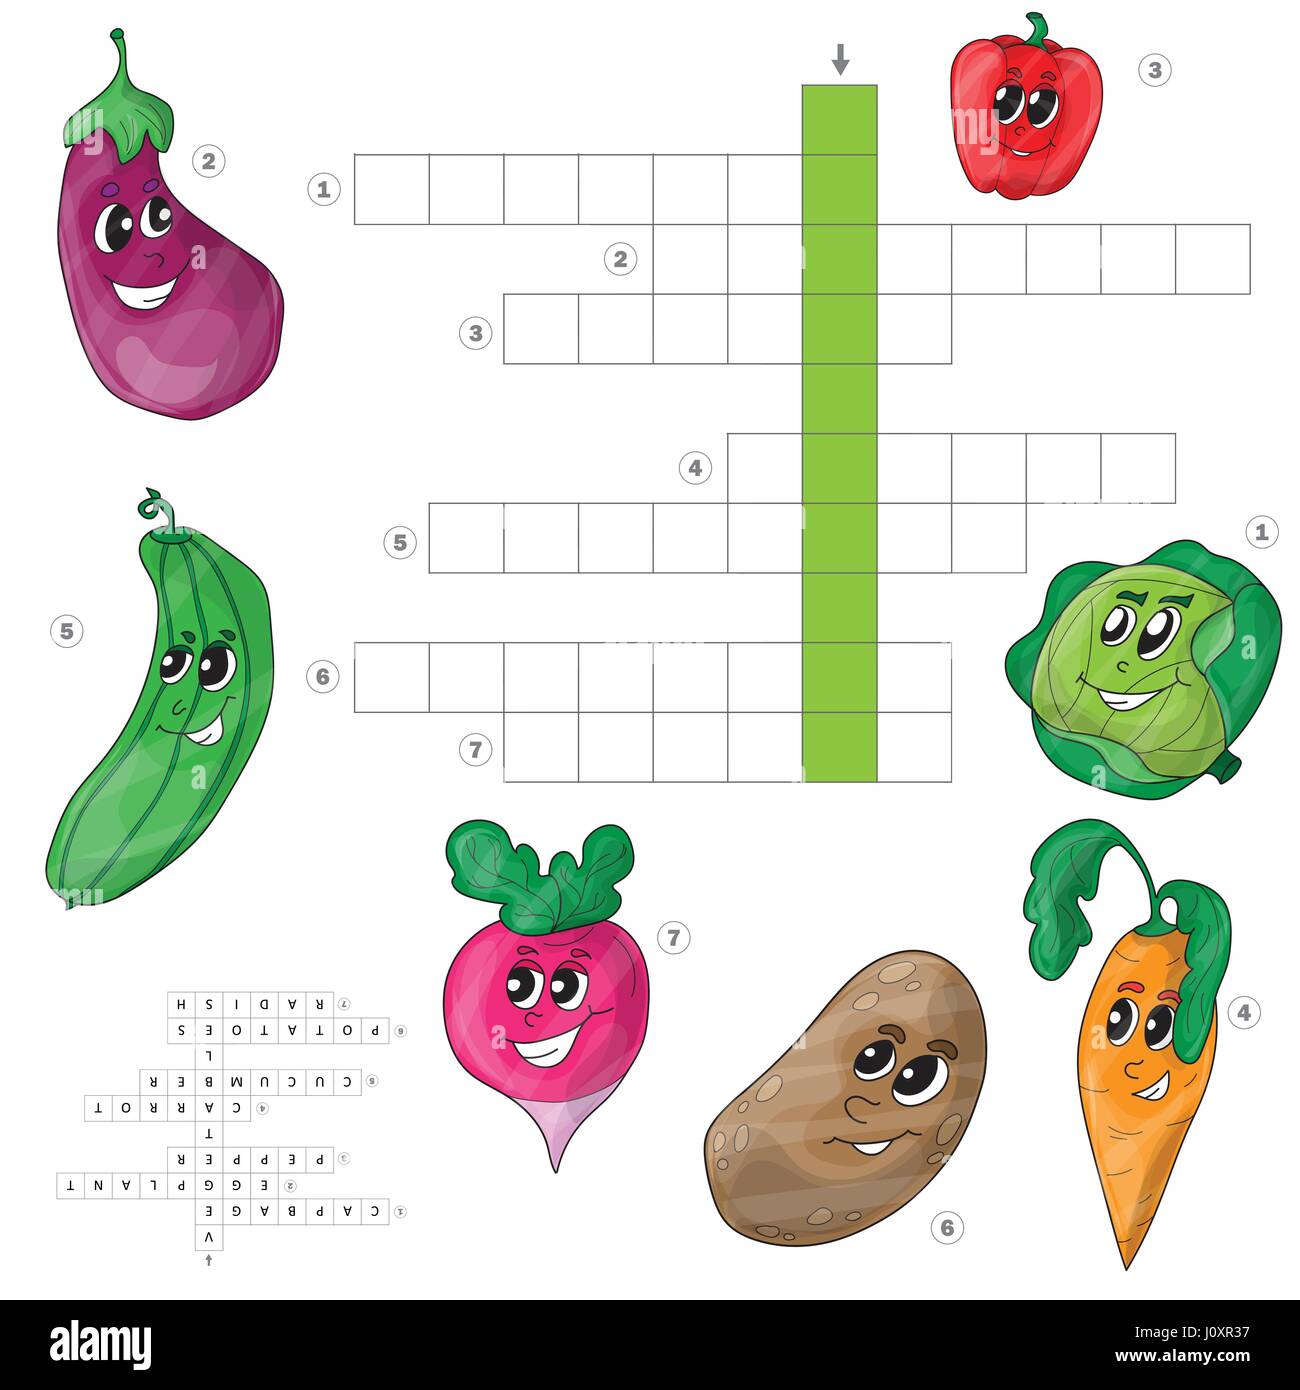 Vektor-Kreuzworträtsel, Spiel für Kinder über Gemüse Stock Vektor